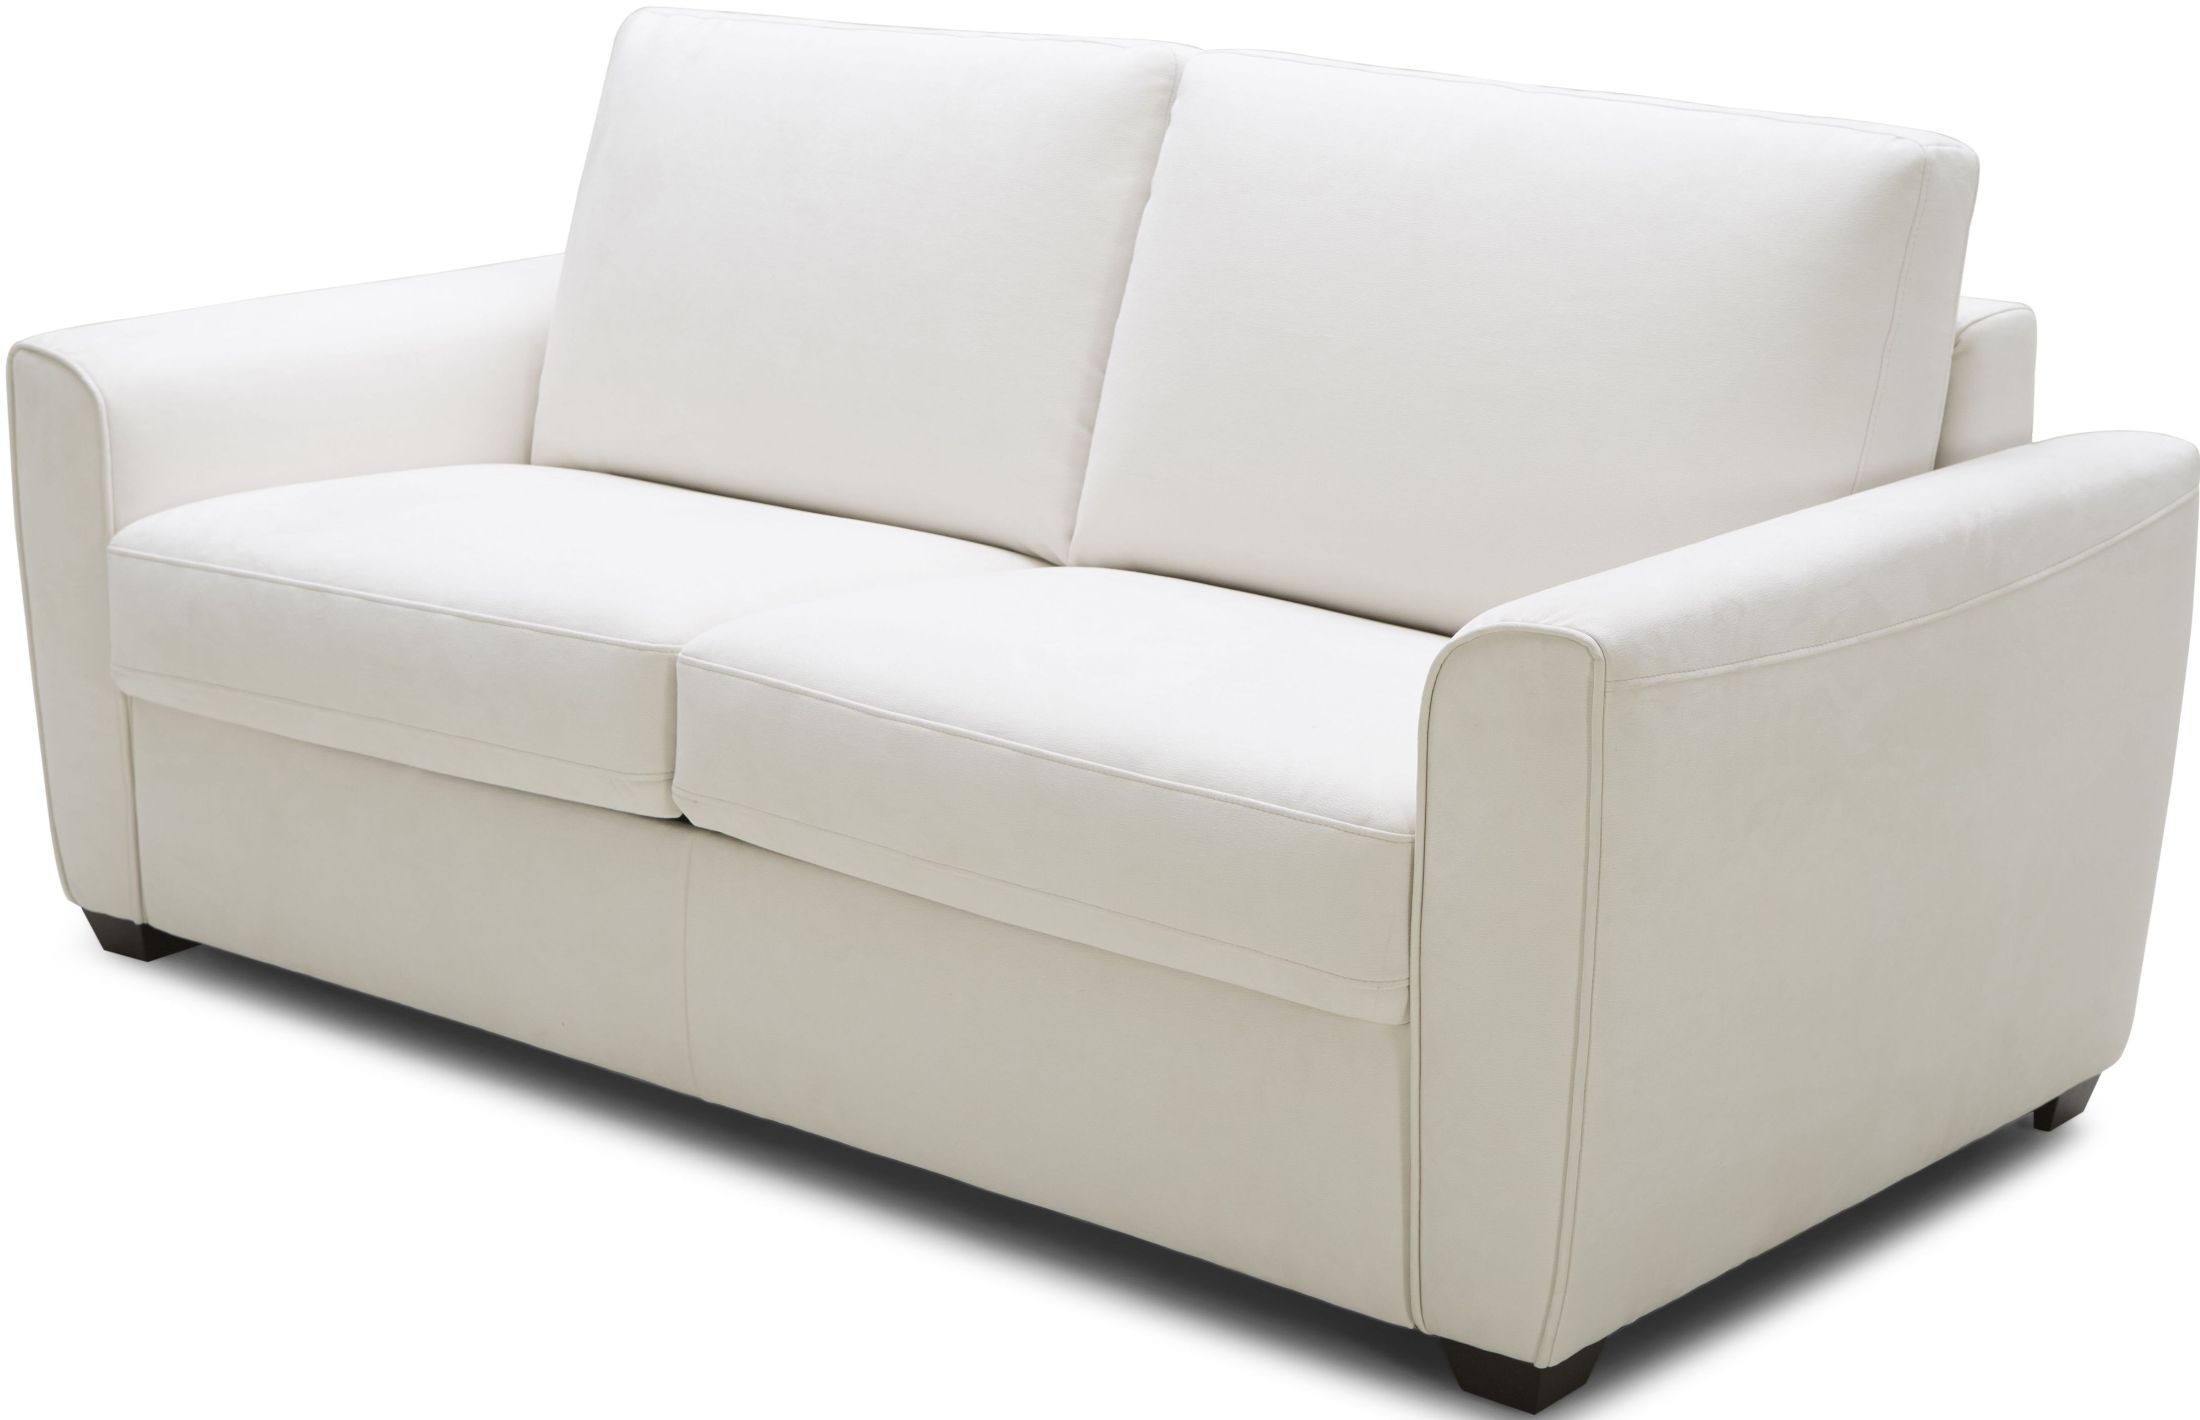 small white sofa bed uk